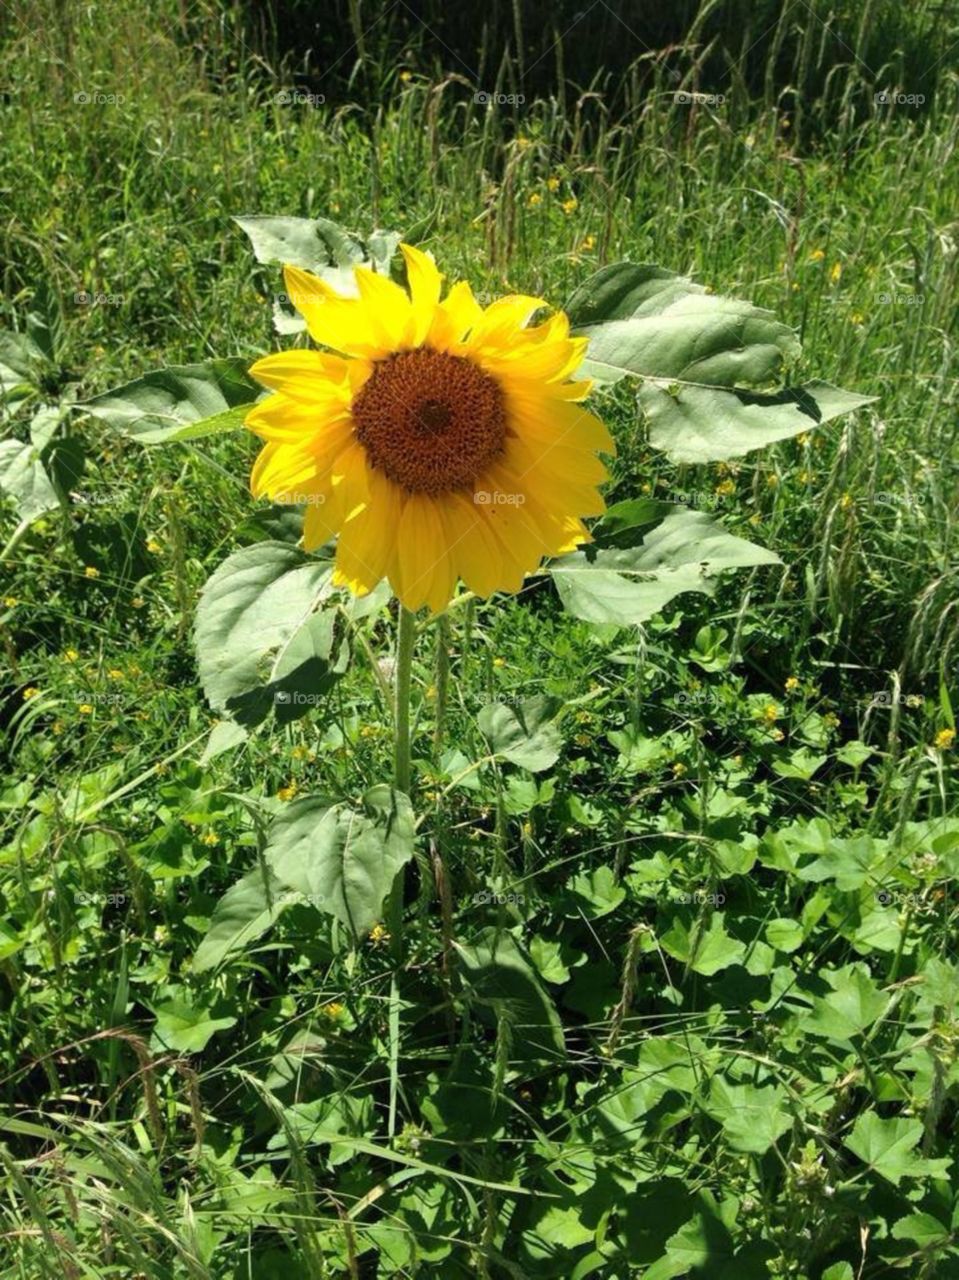 Sunflower is bright